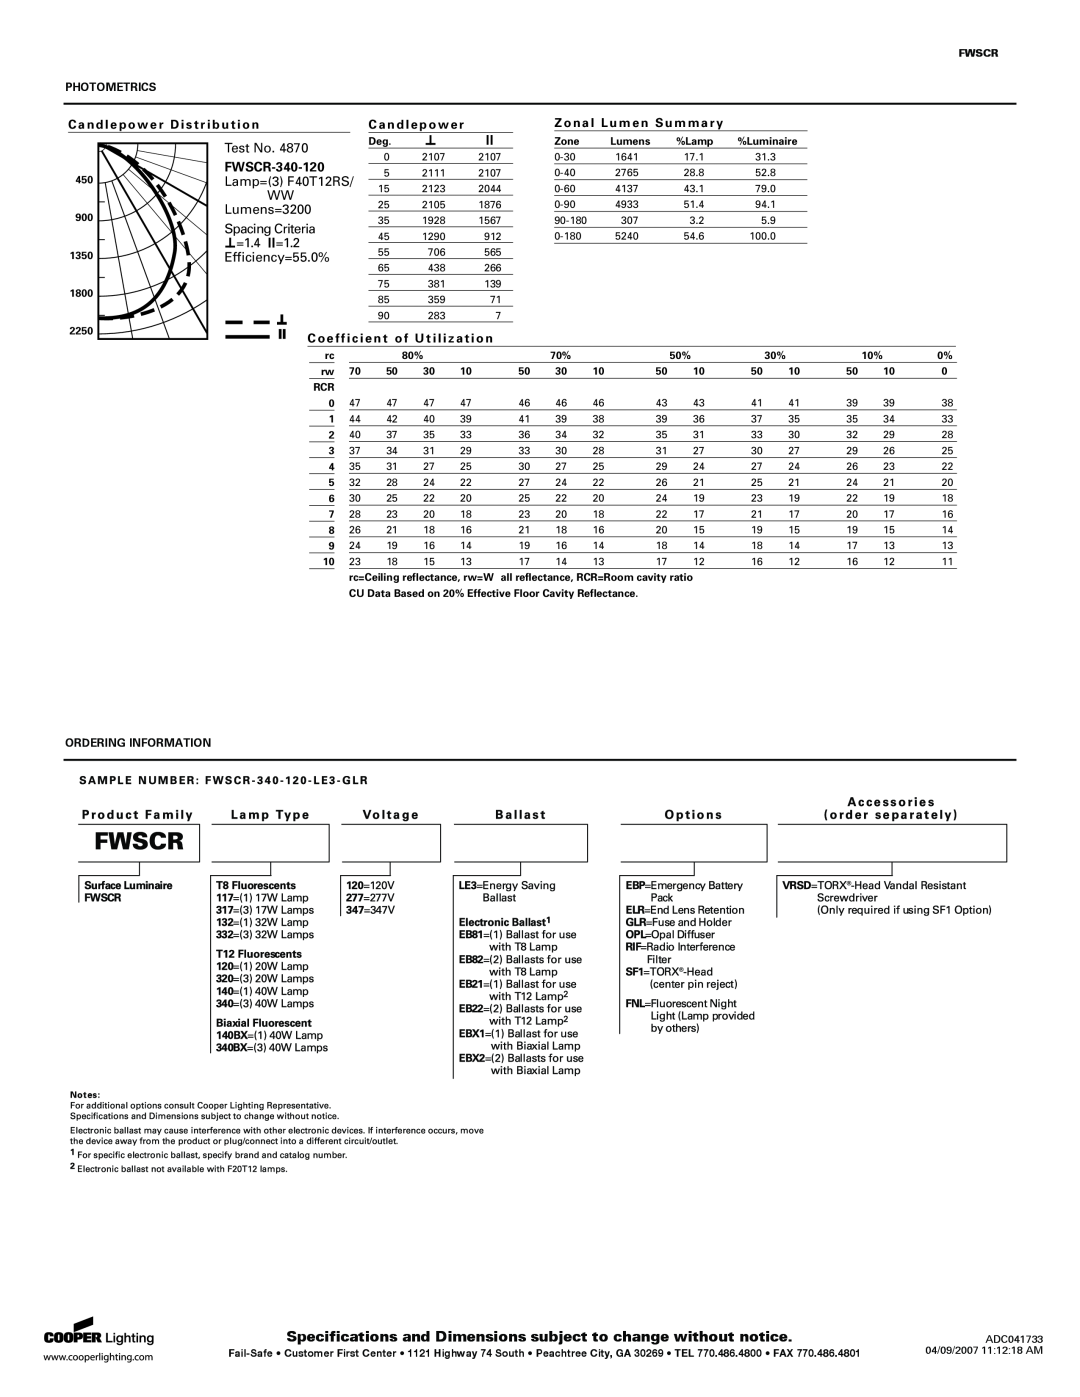 Cooper Lighting FWSCR-340-120, Photometrics, Candlepower Distribution, Zonal Lumen Summary, =1.4, Ordering Information 